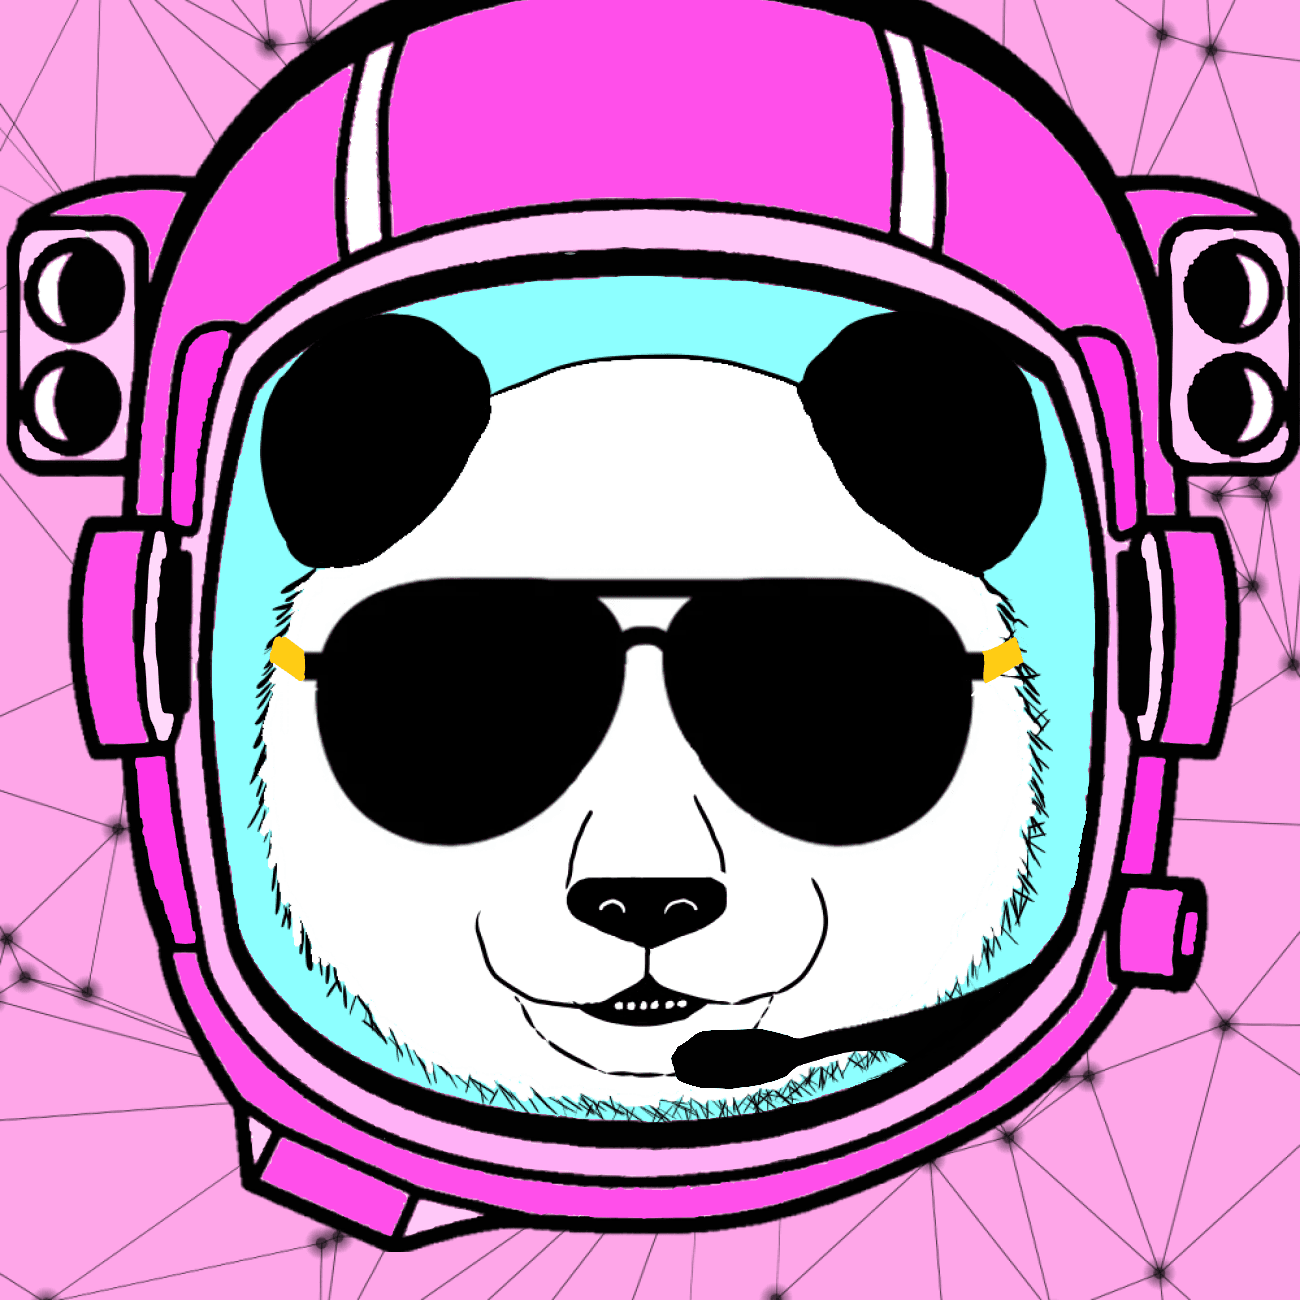 Interstellar Travellerz: Pete the Panda